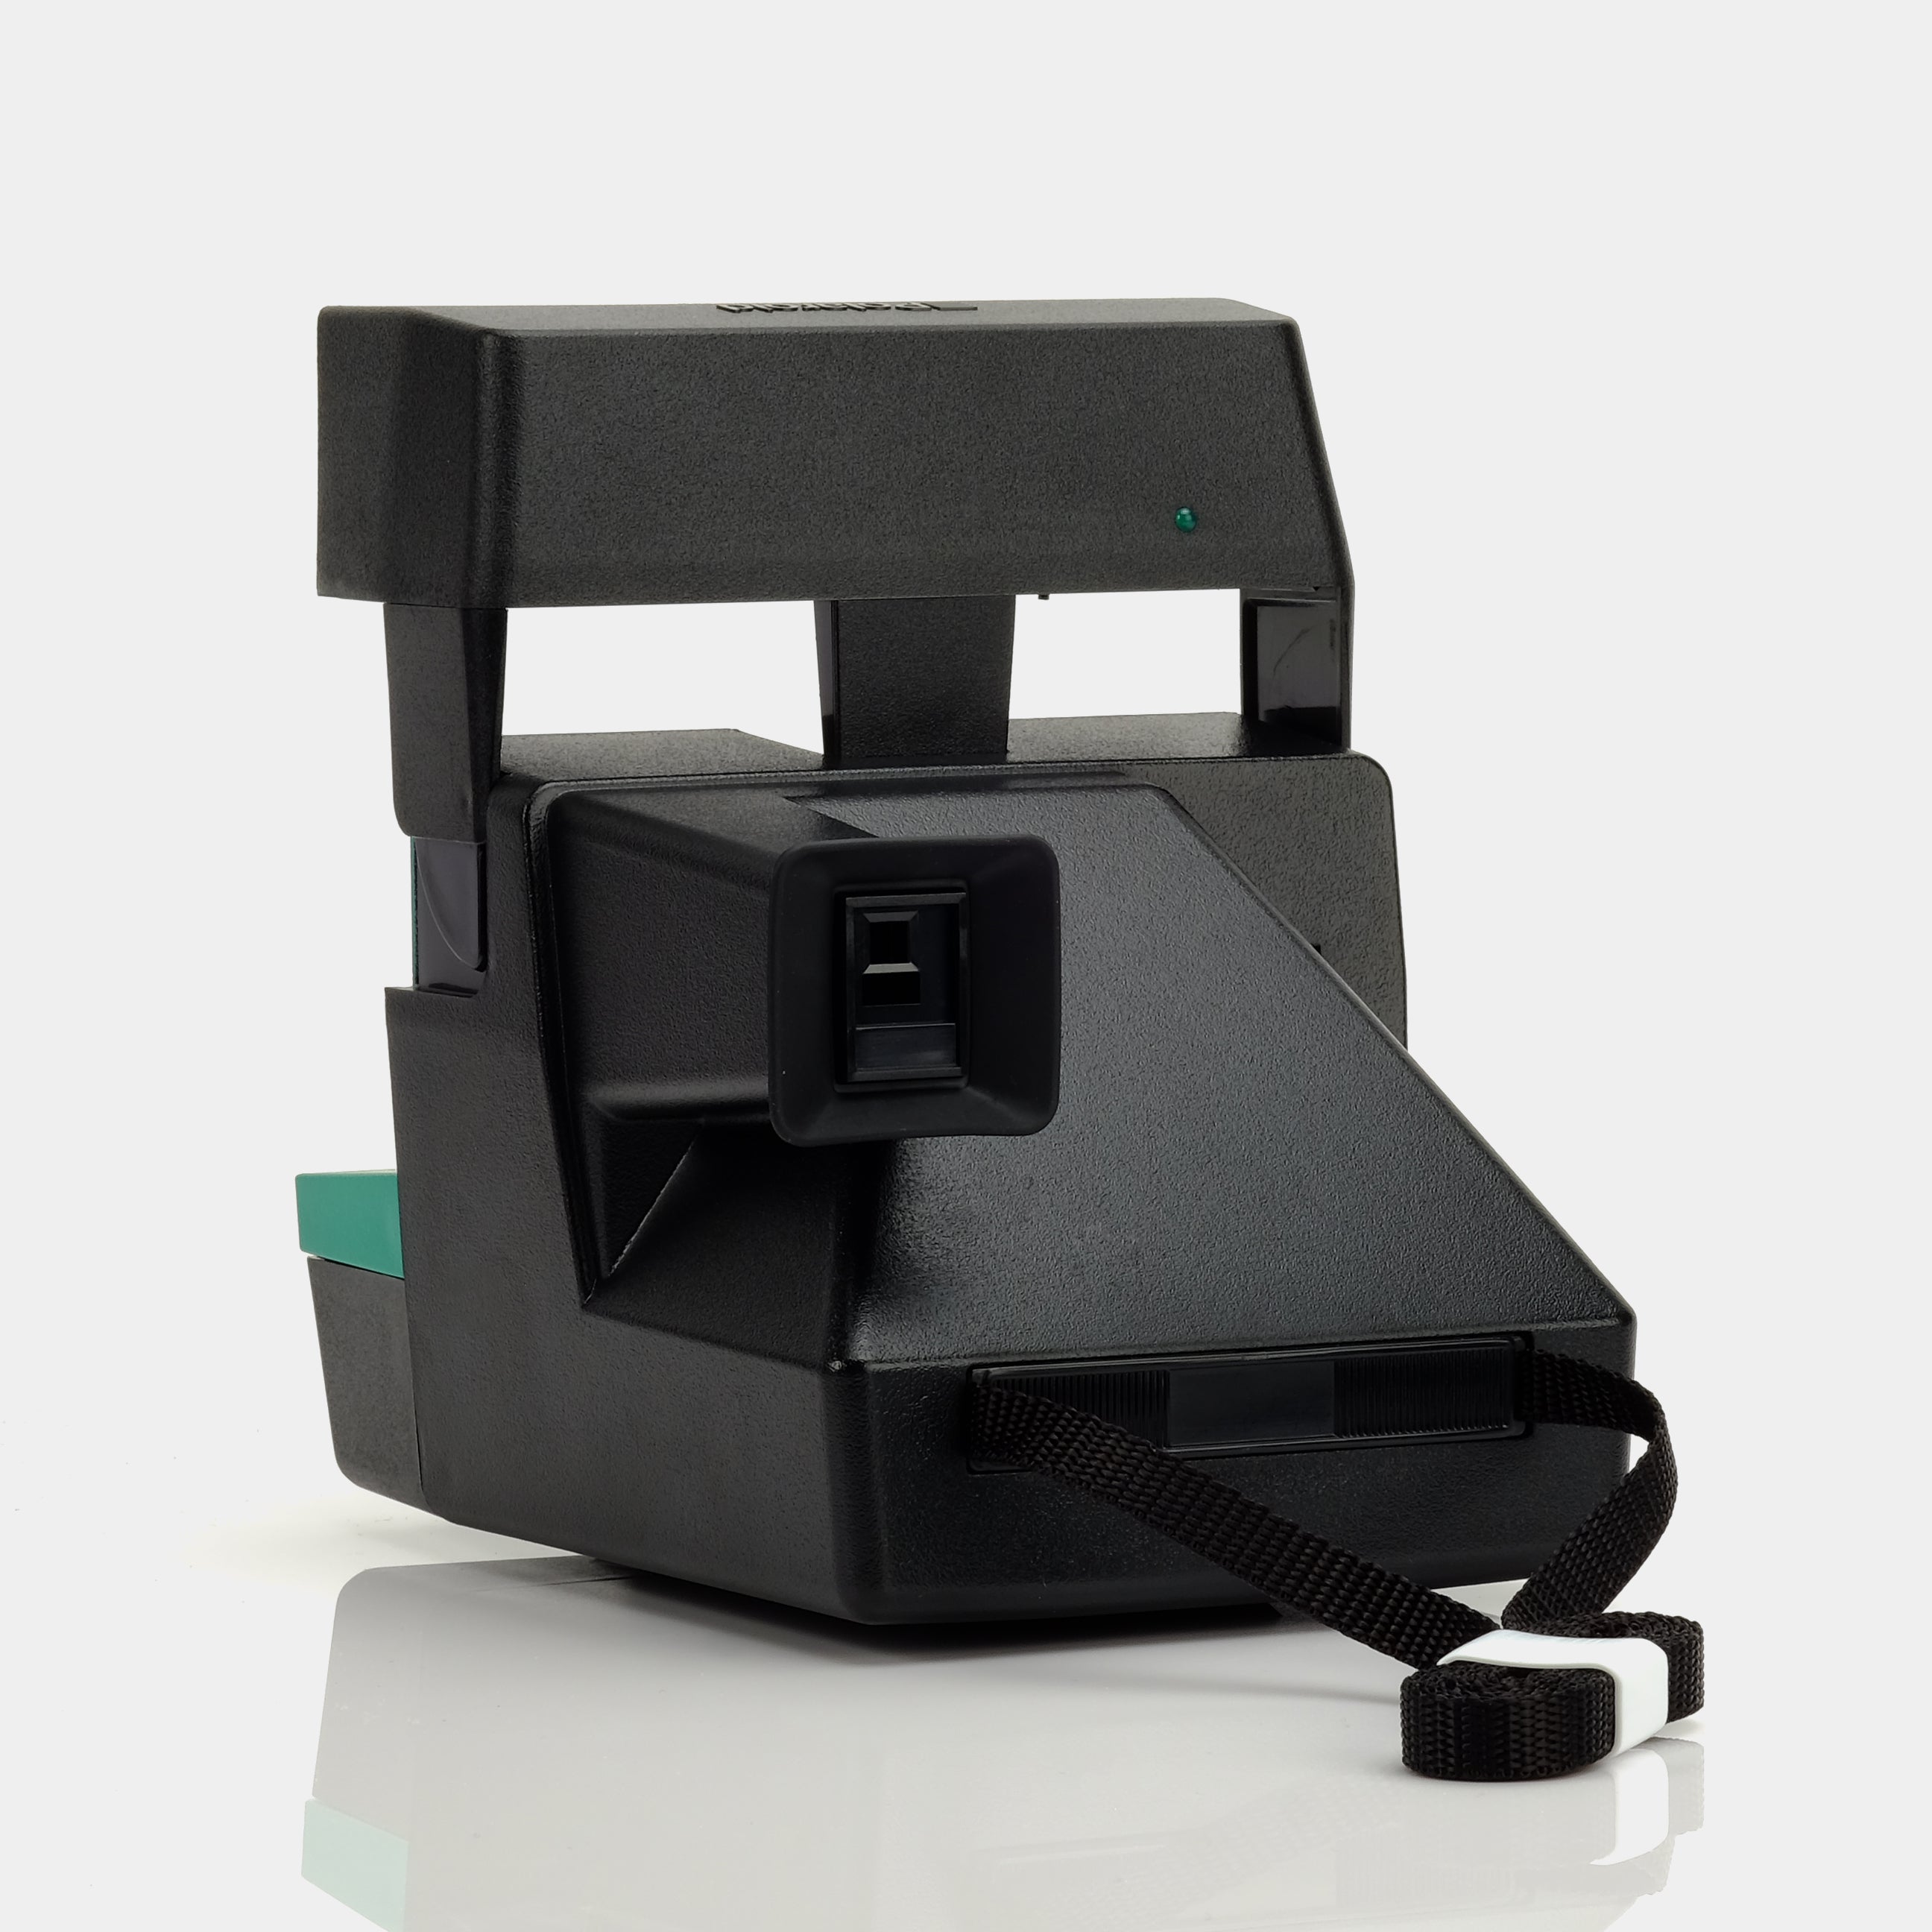 Polaroid 600 Forest Green Instant Film Camera